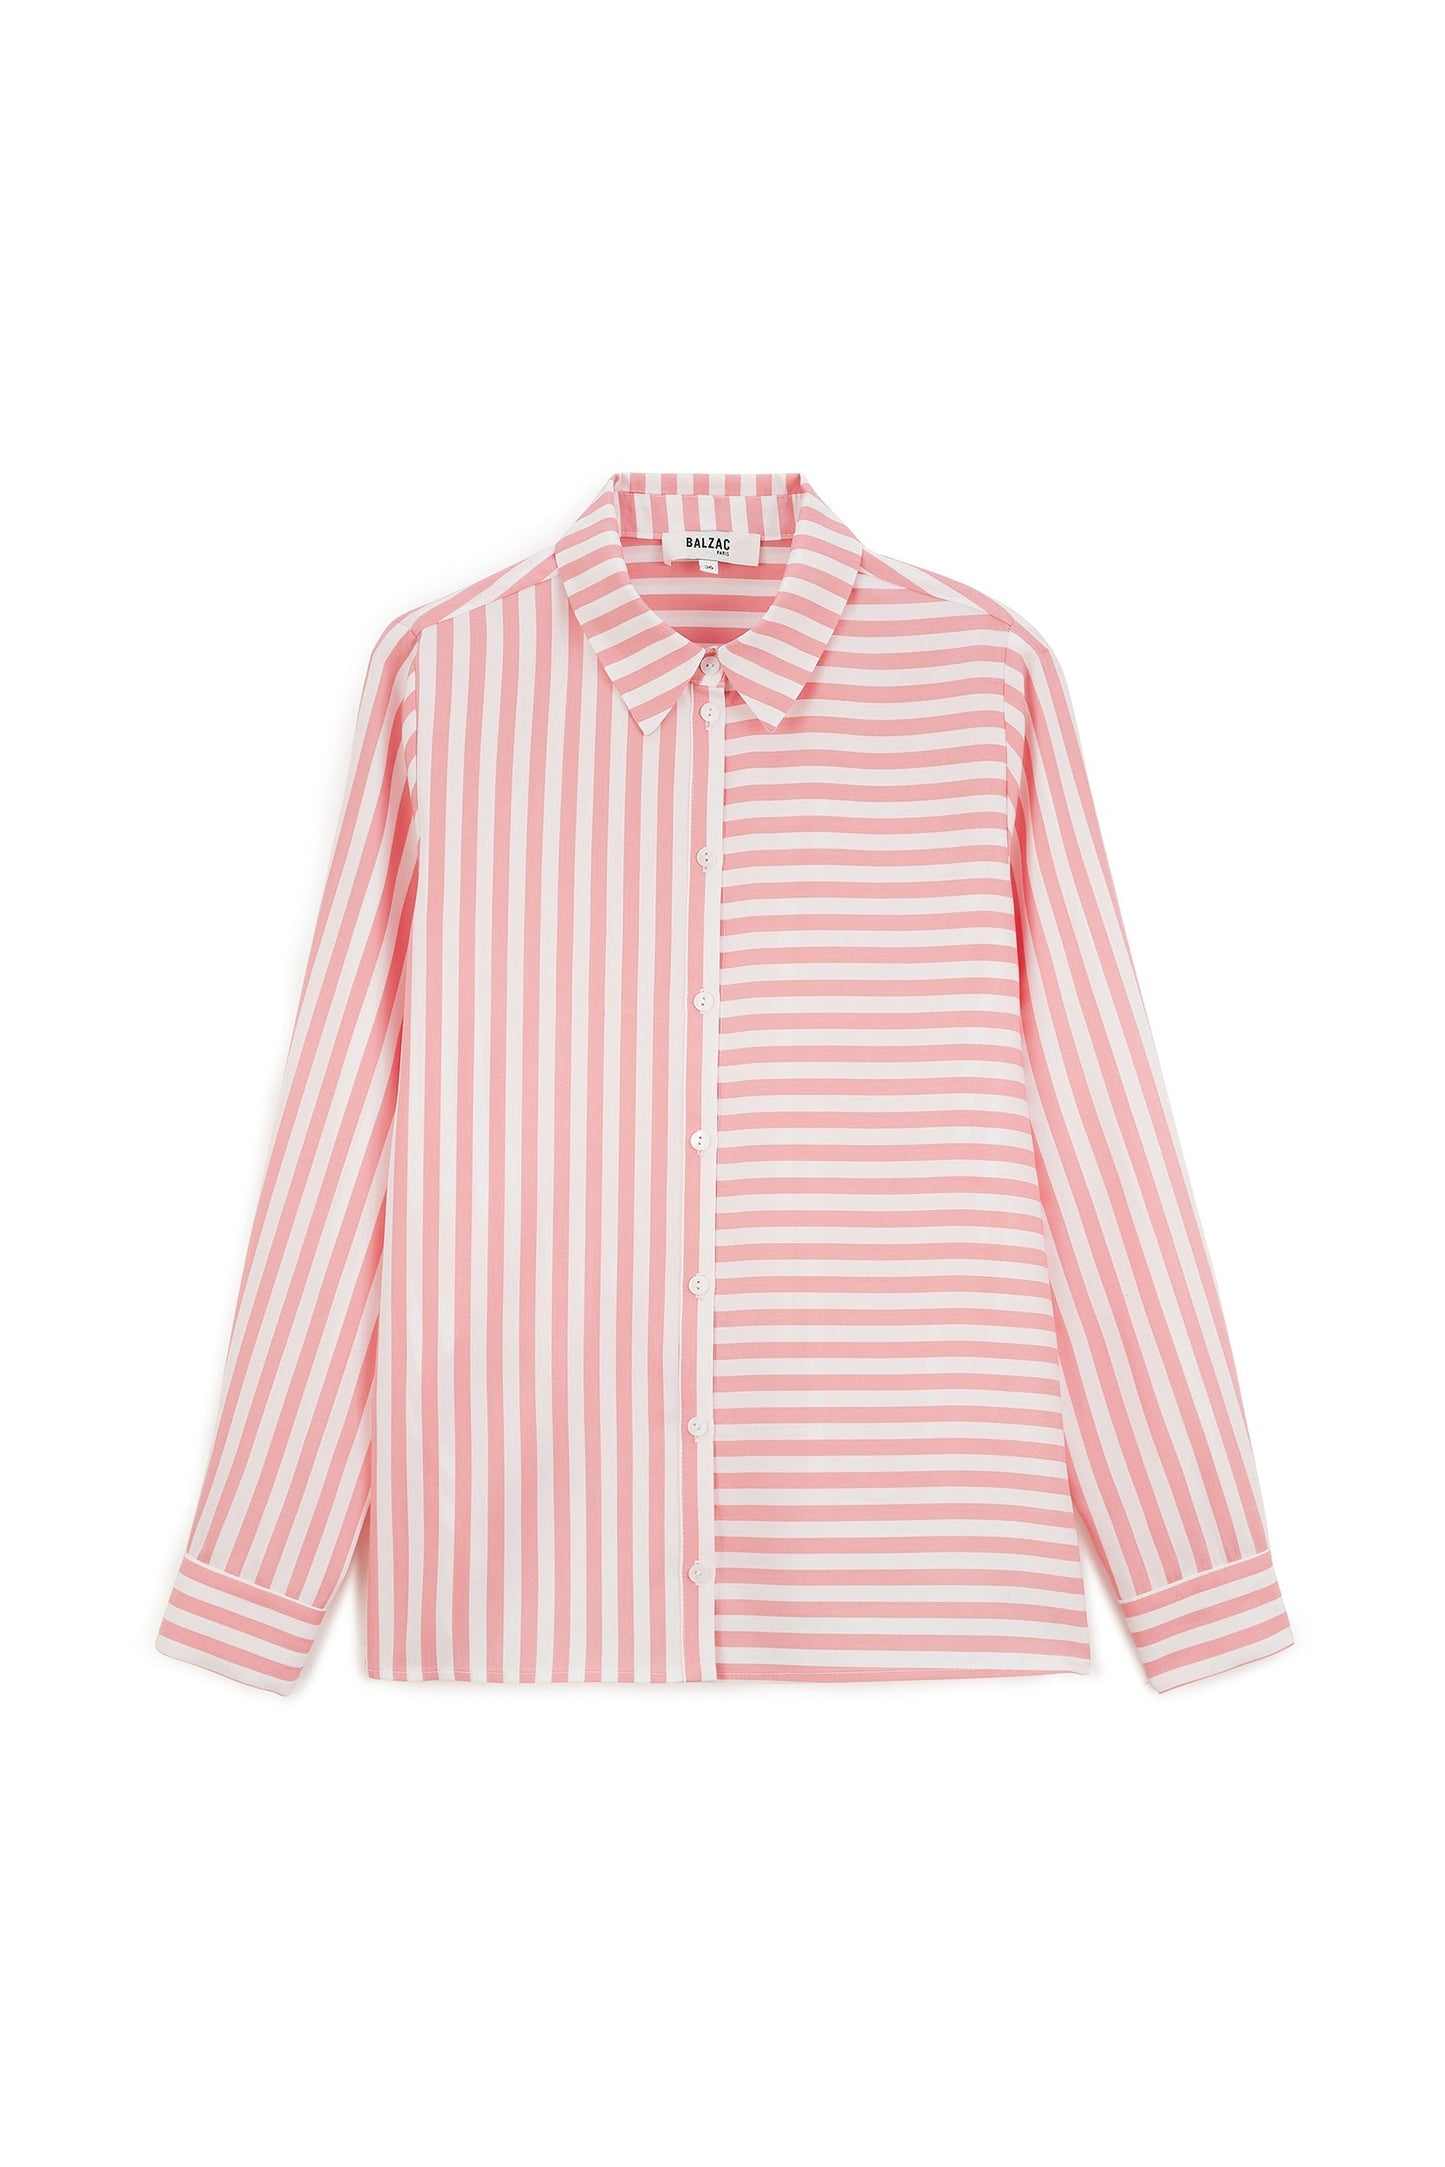 Bindweed shirt with pink stripes